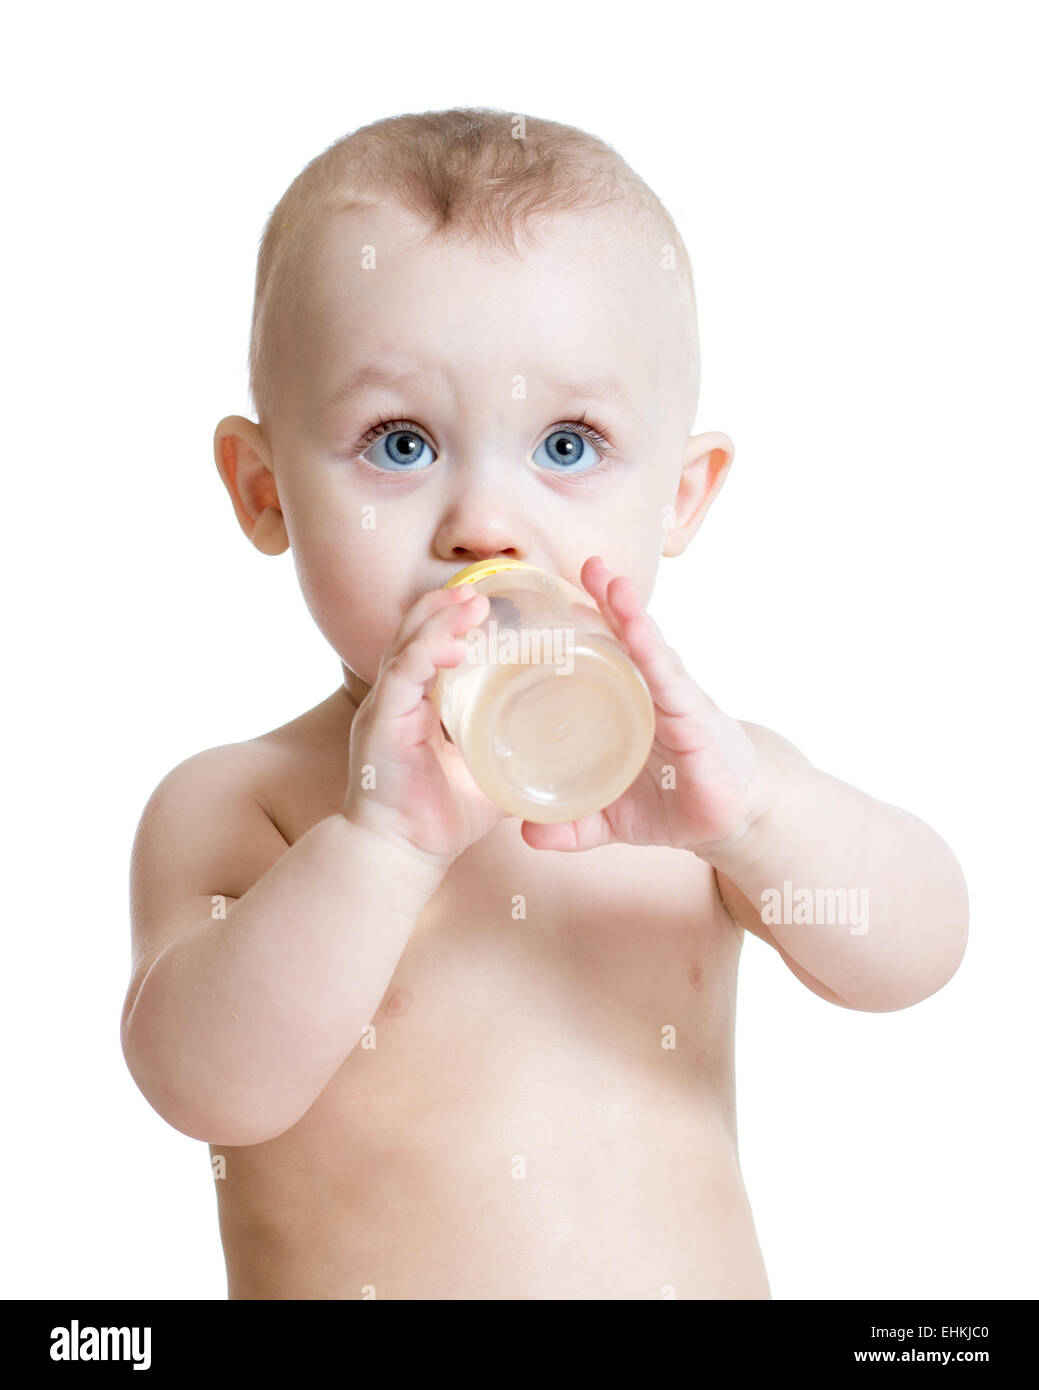 toddler drinking orange juice from gripper bottle Stock Photo - Alamy